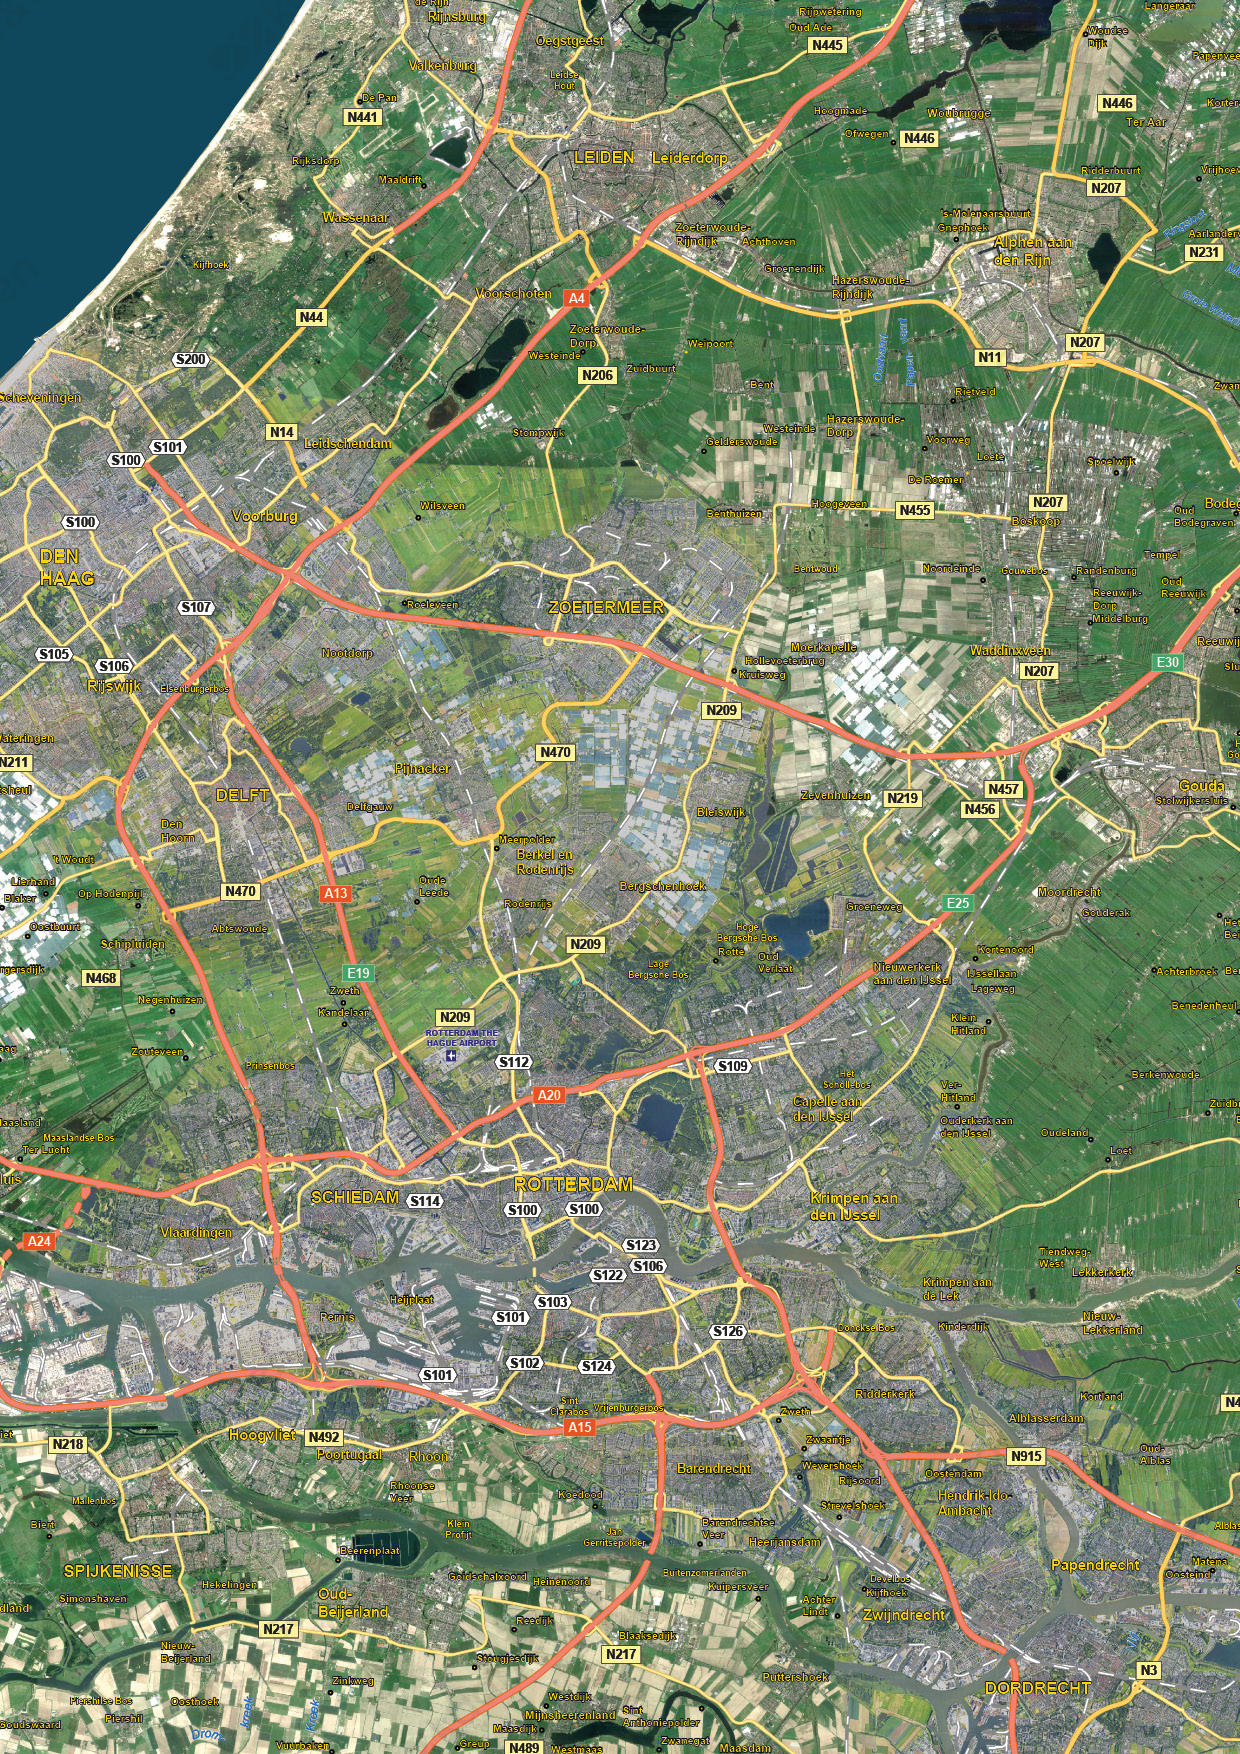 Satellietkaart Zuid-Holland